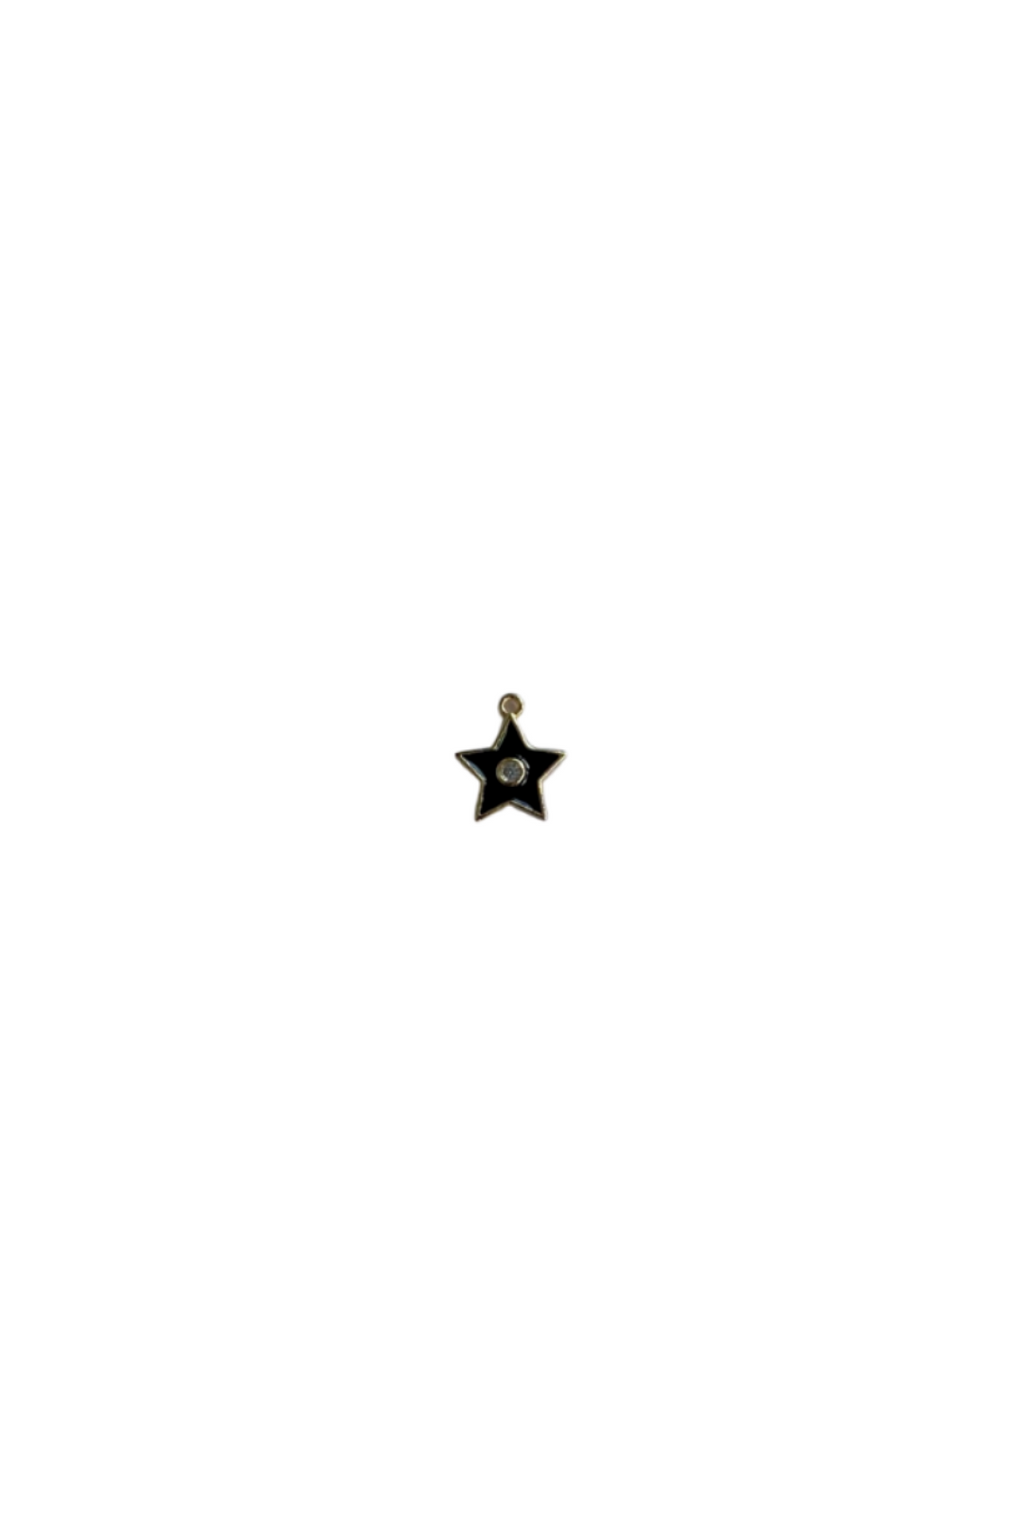 Tiny Black Star Dot Charm